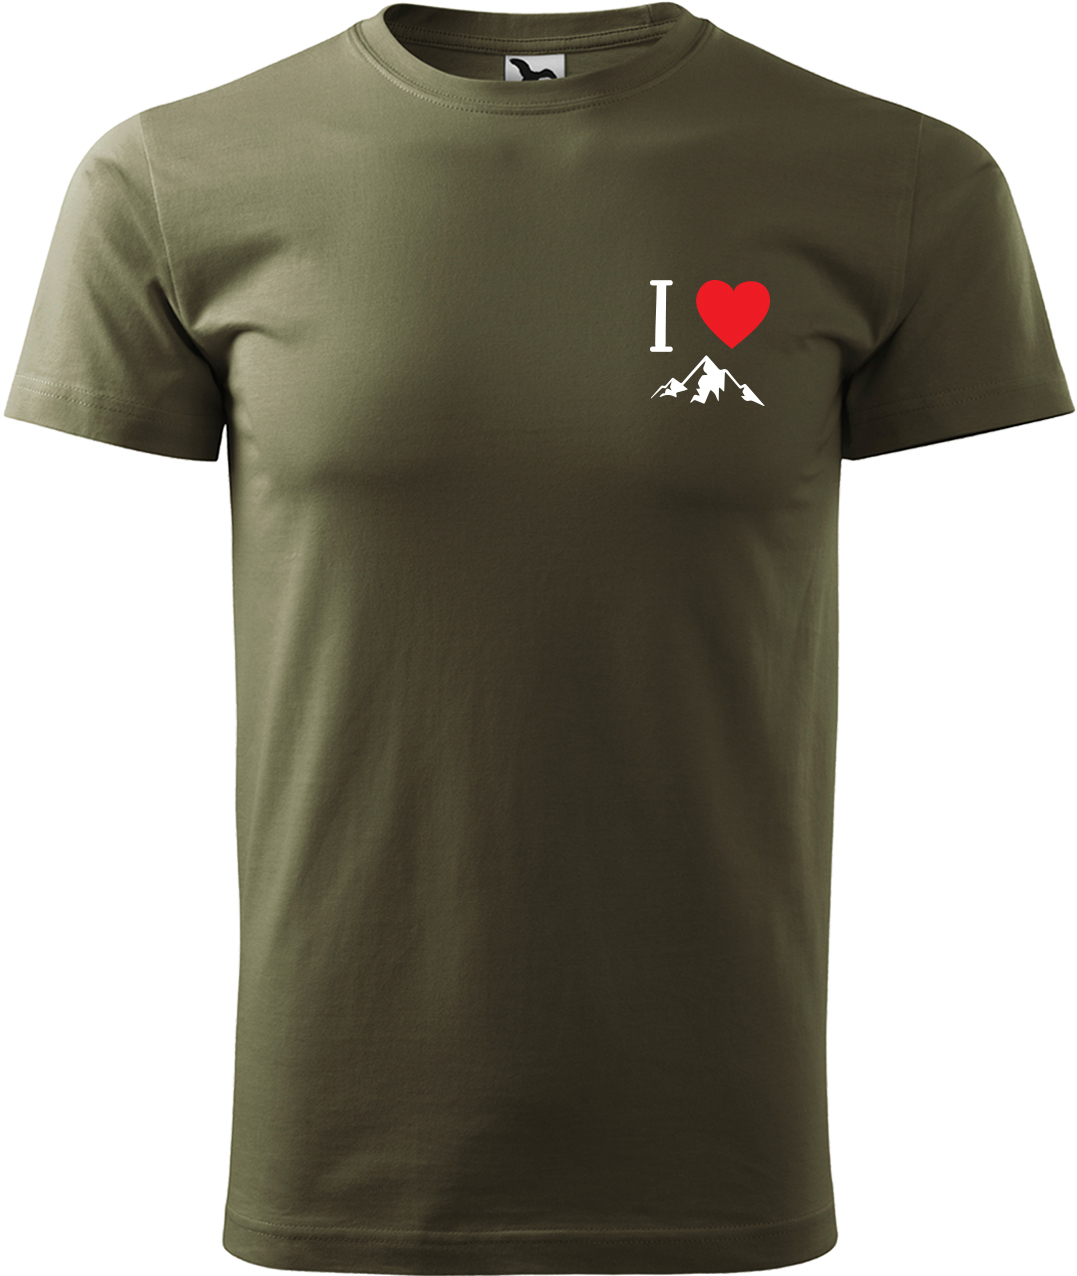 Pánské tričko na hory - I love mountain Velikost: S, Barva: Military (69), Střih: pánský